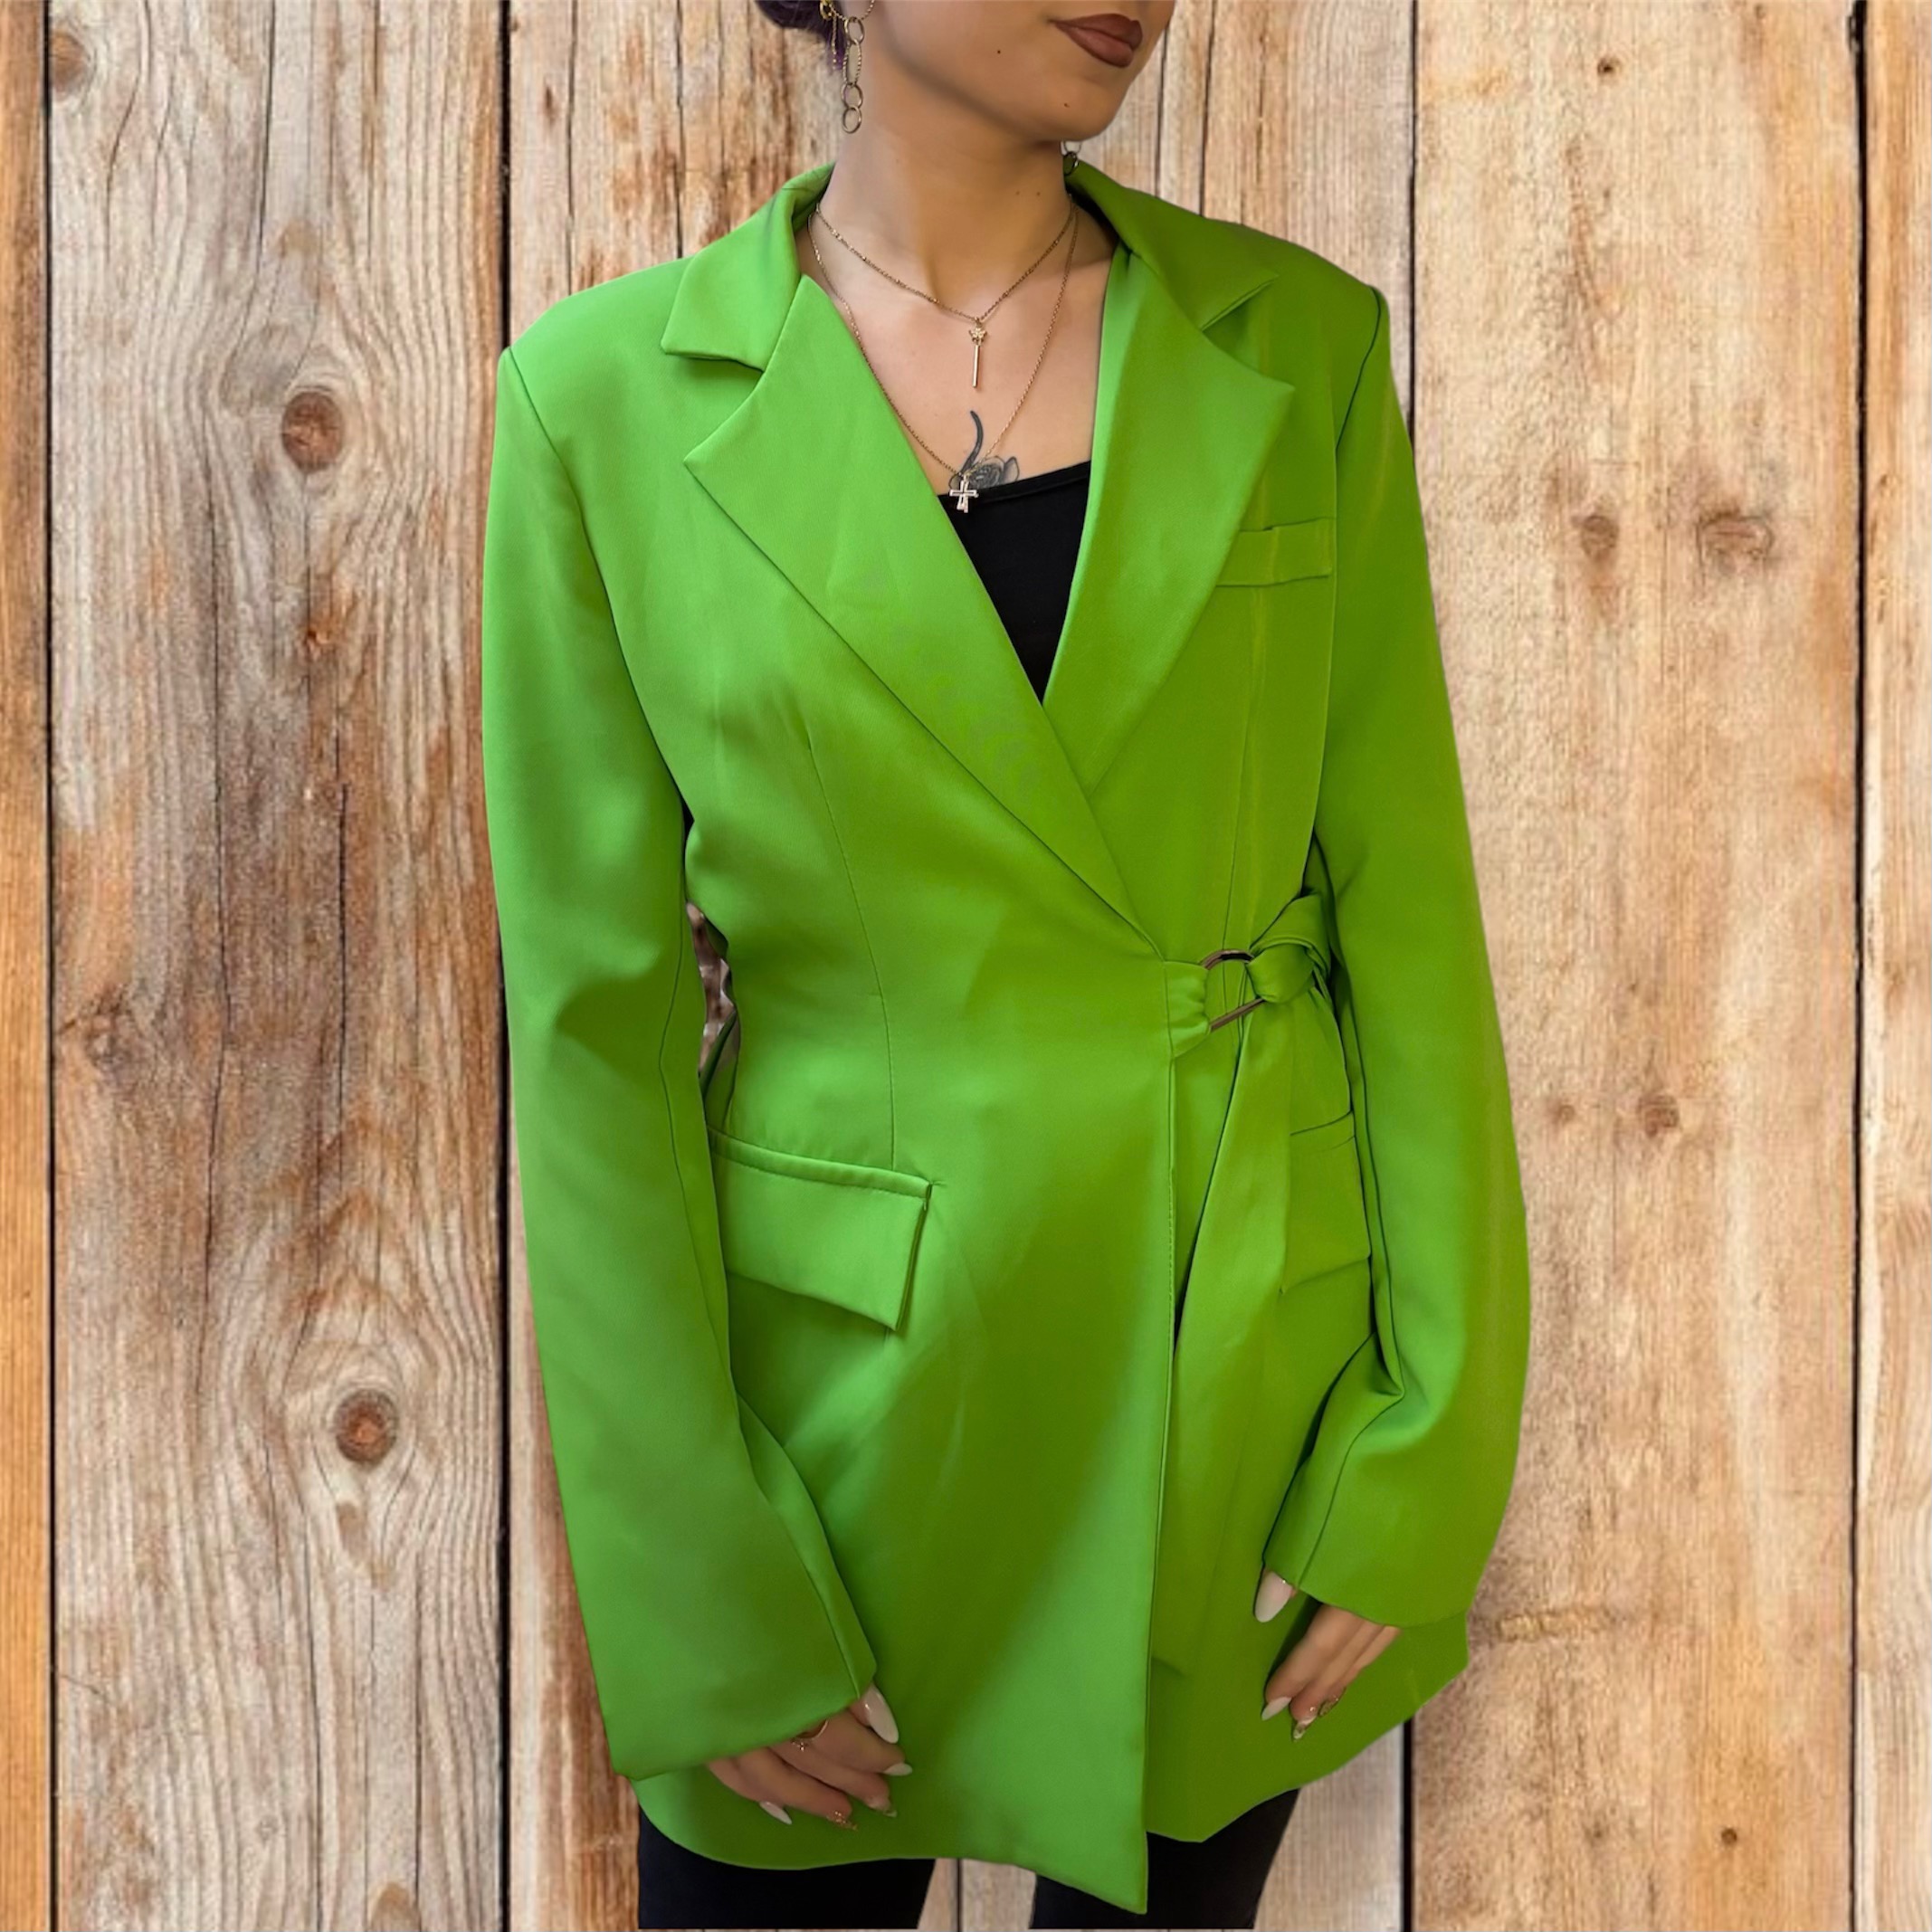 anissa-verte-veste-costume-femme-tendance-qualité